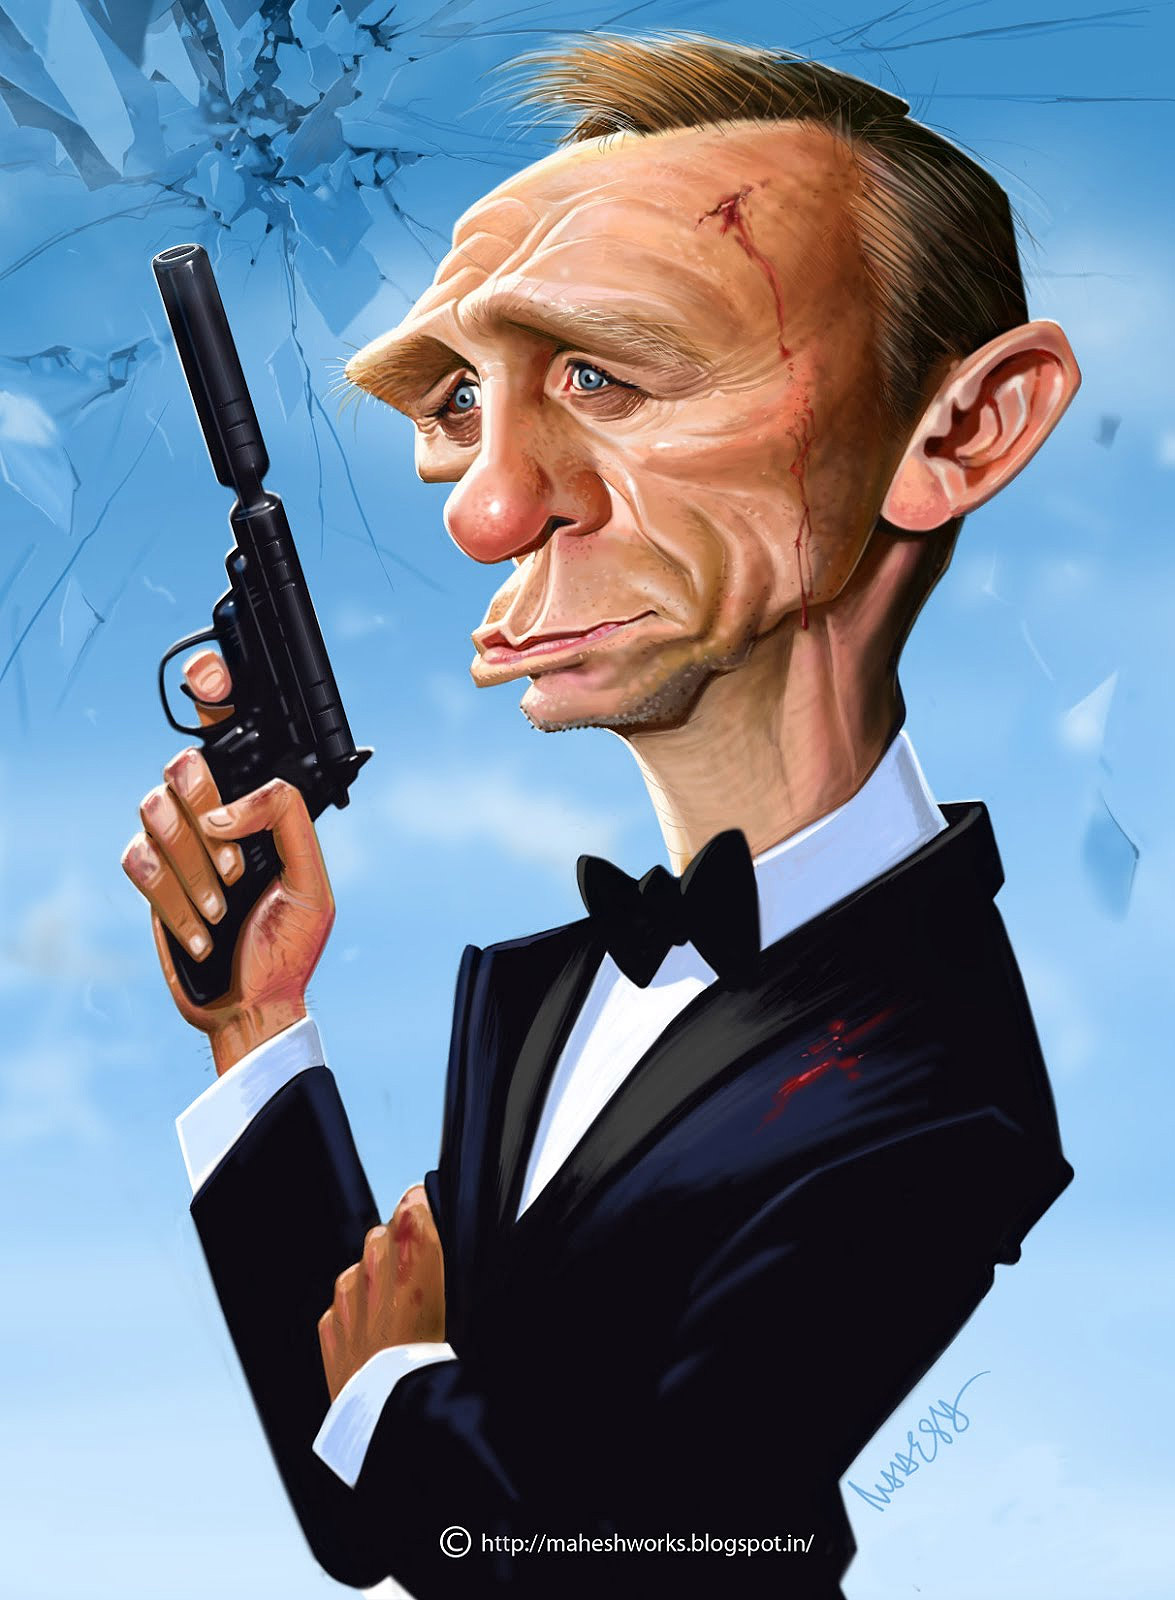 Caricatura de Daniel Craig como James Bond